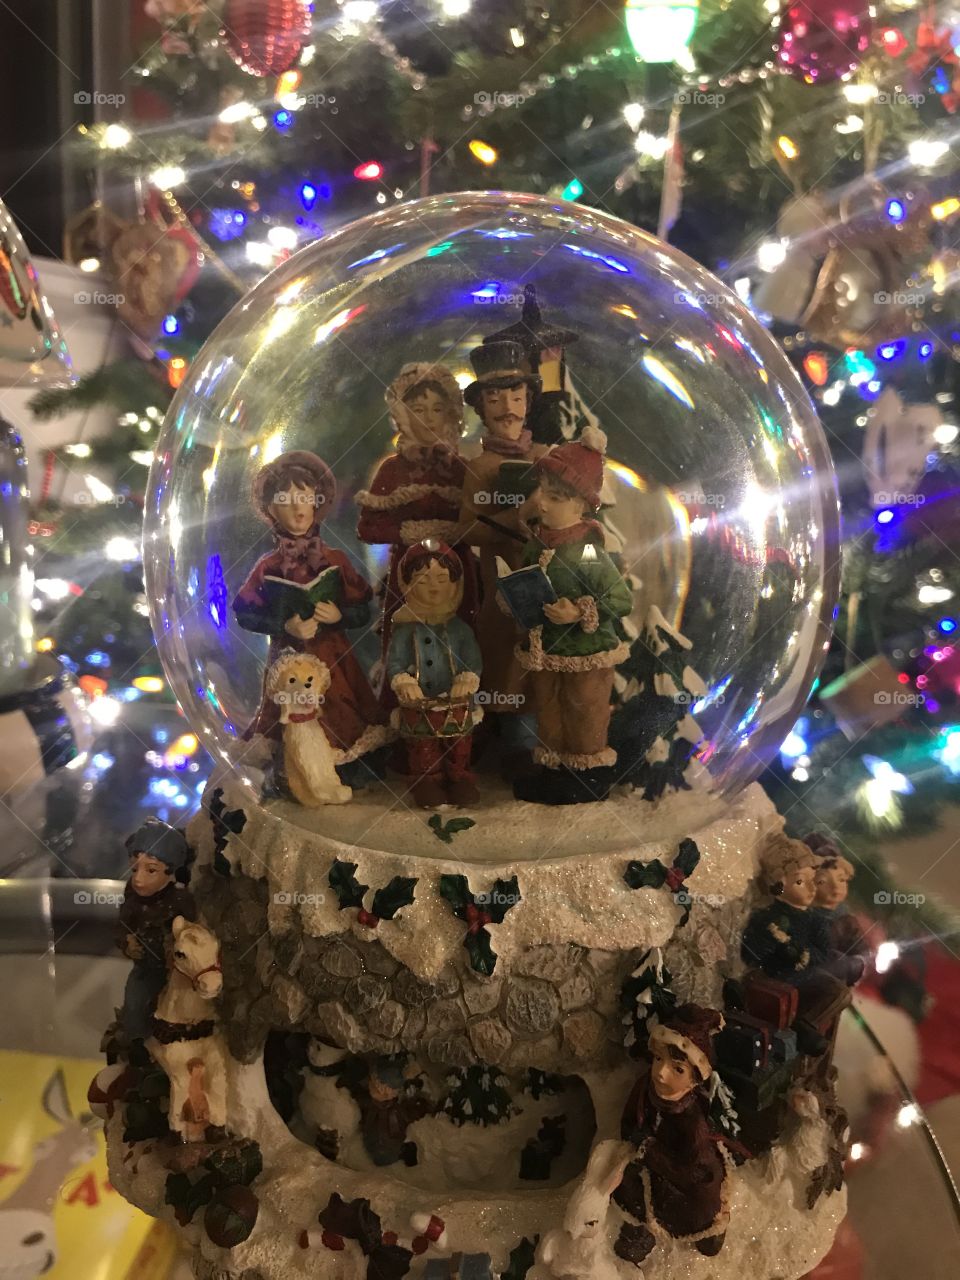 Snow globe and Christmas tree